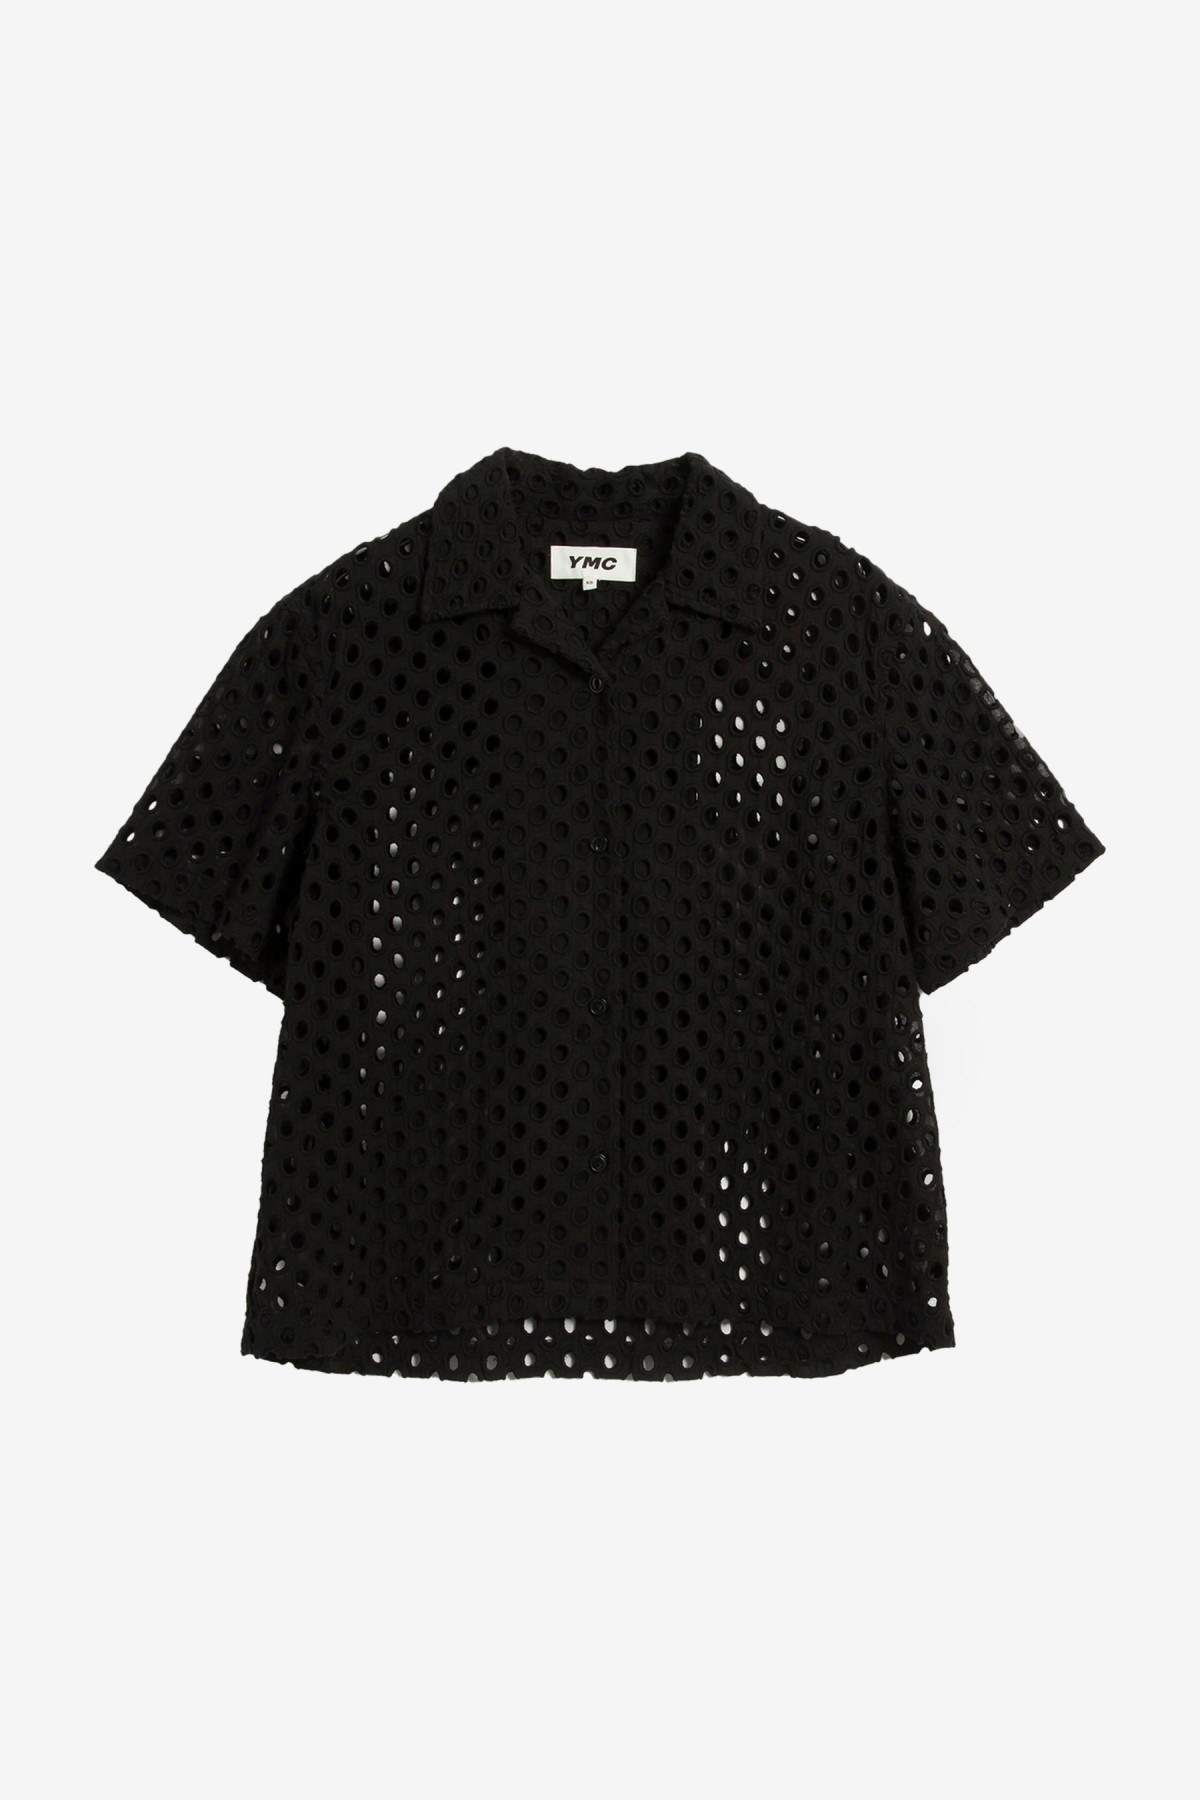 YMC You Must Create Vegas Short Sleeve Shirt in Black